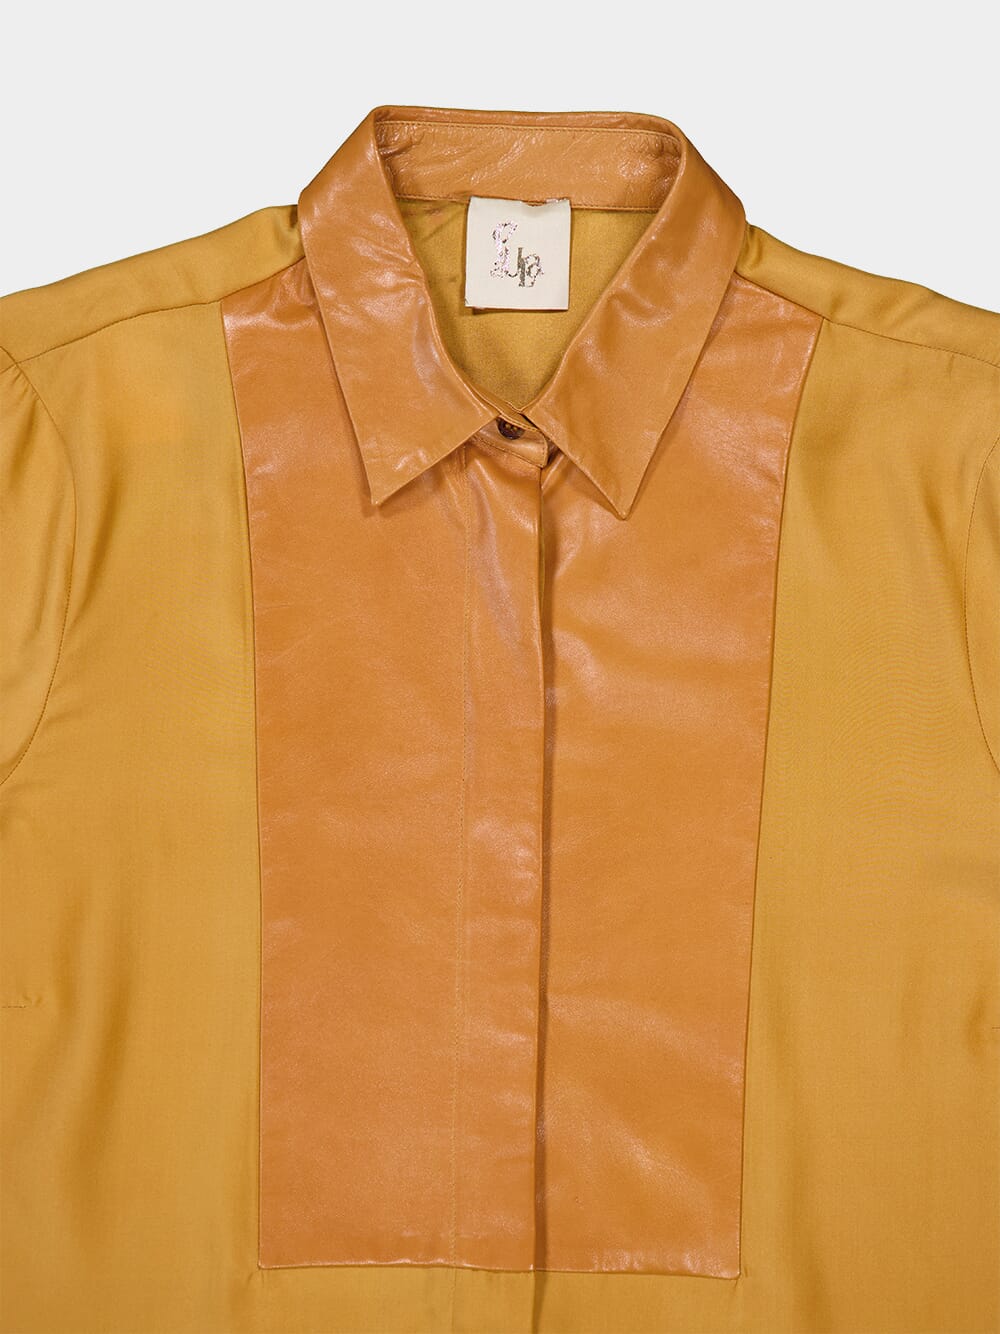 PaulaCosmos Silk Shirt with Leather Bib at Fashion Clinic